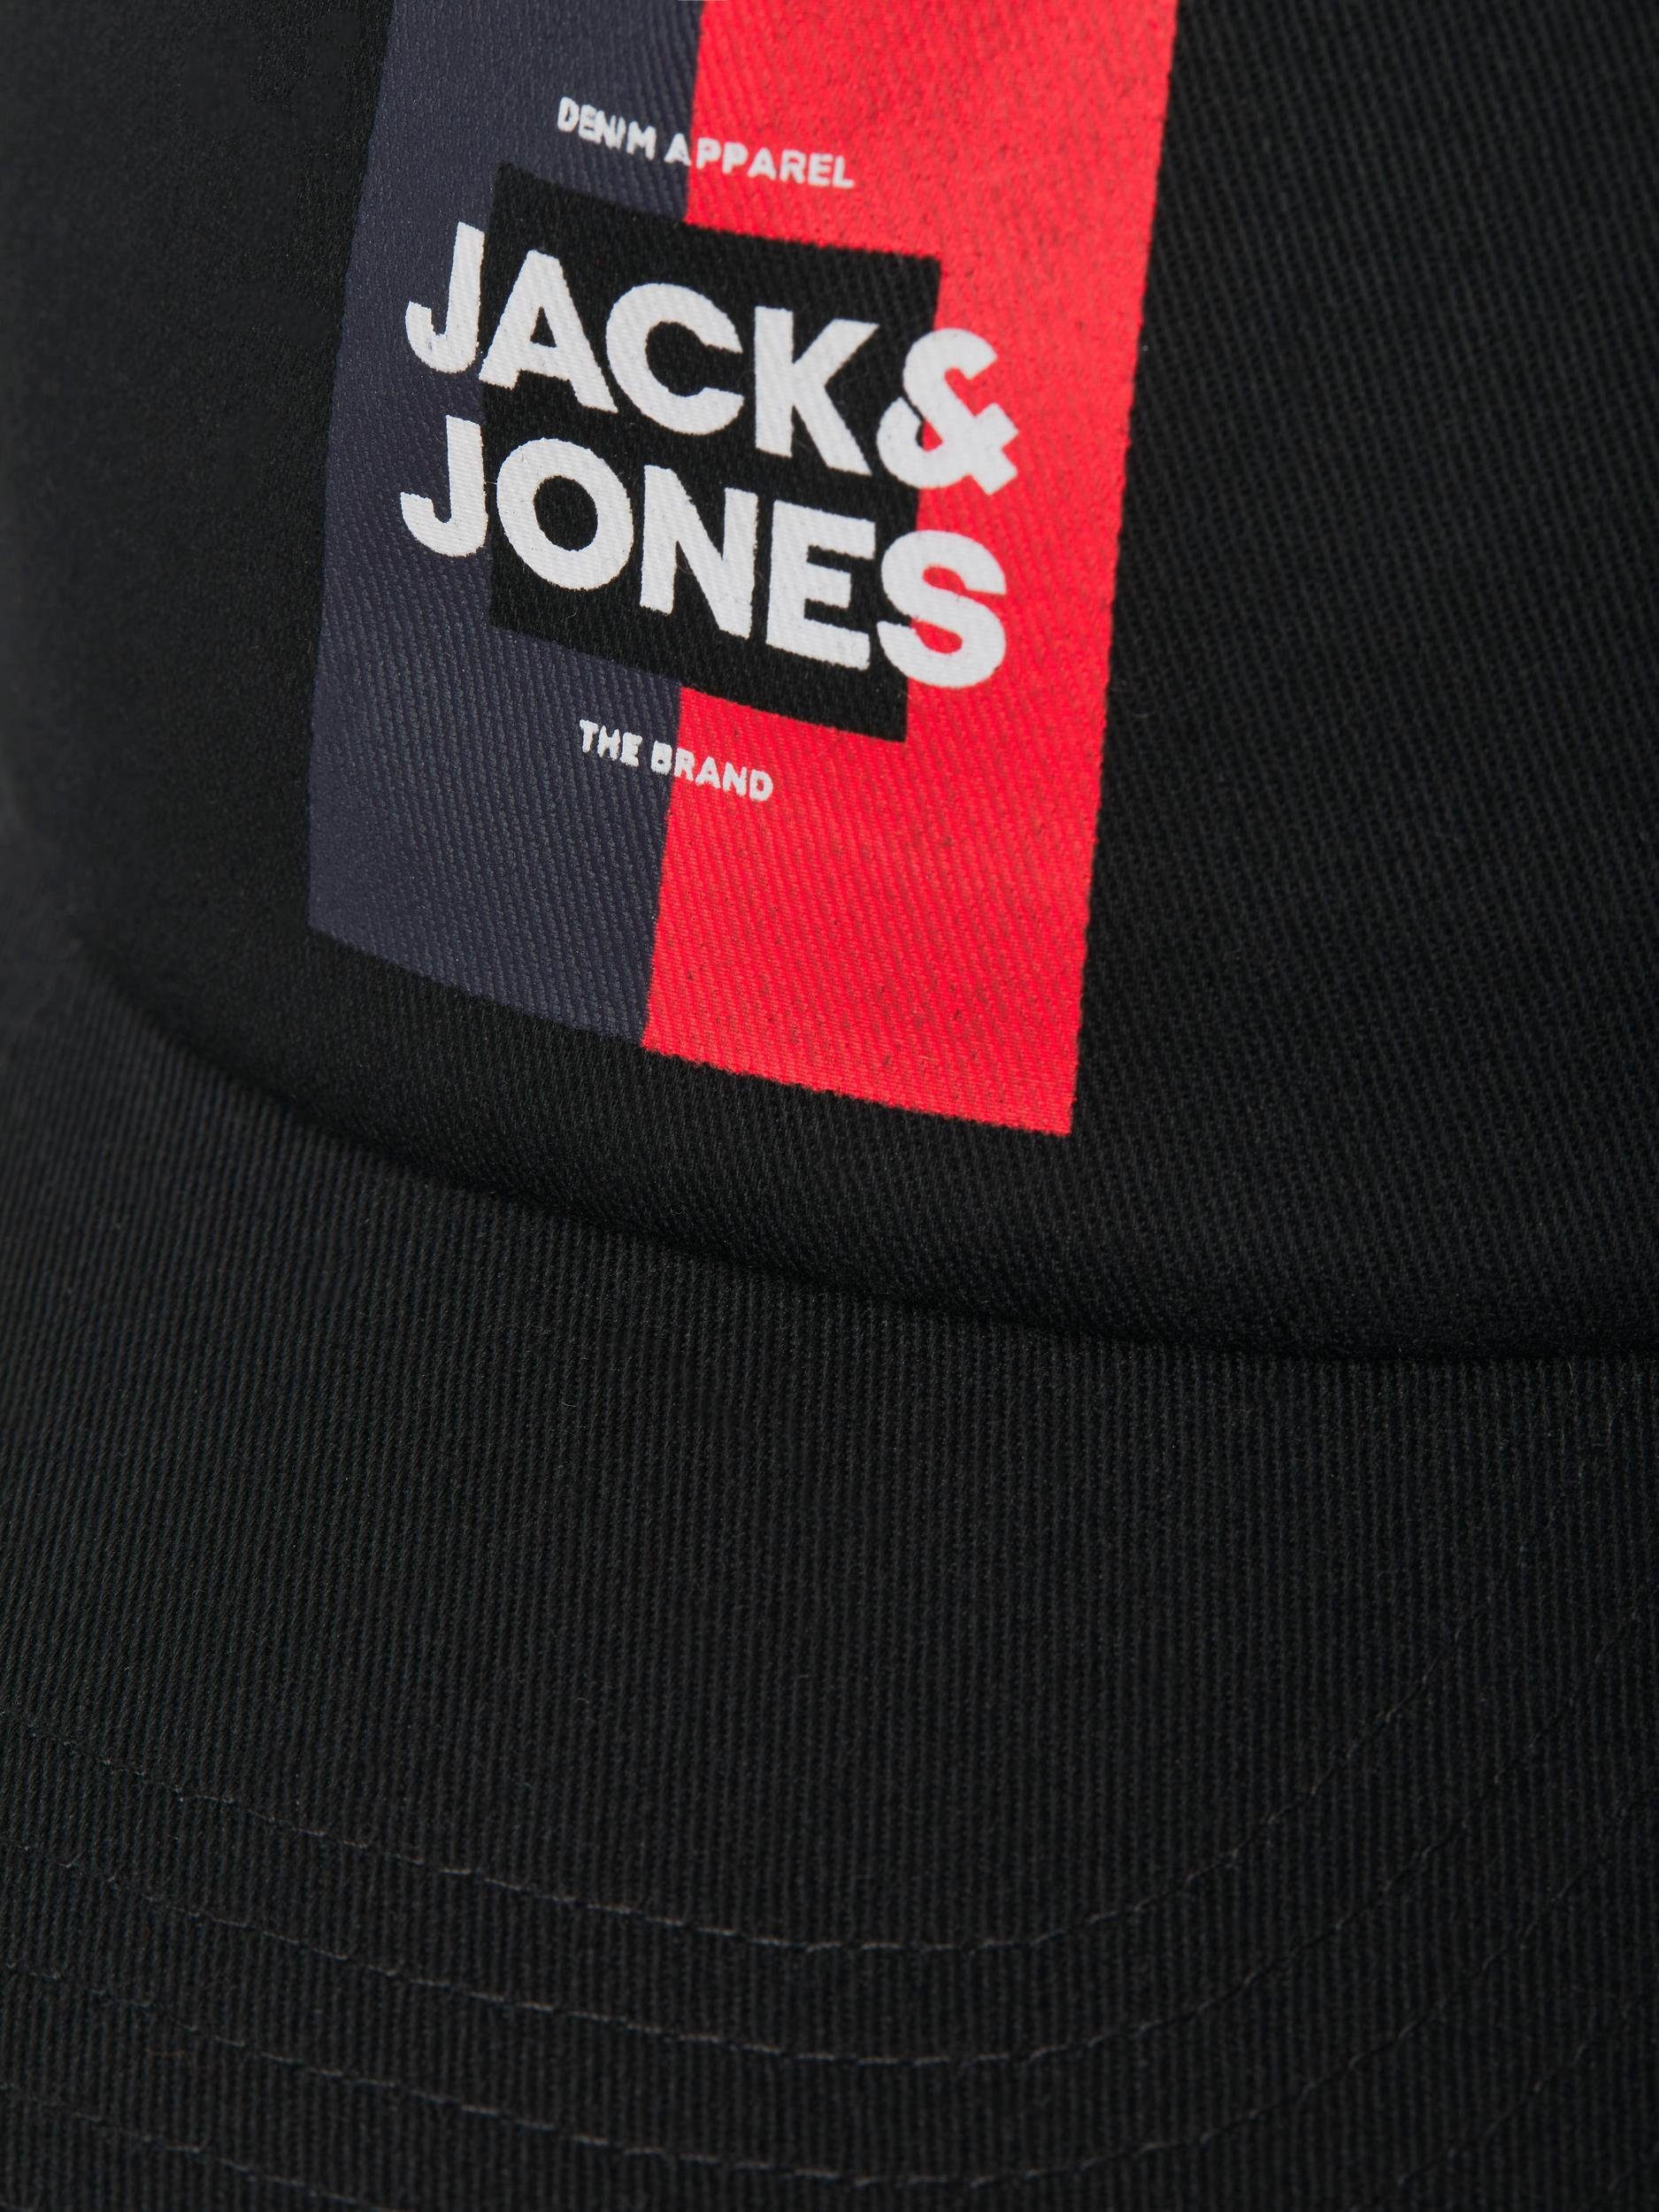 & Black Baseball JACOSCAR Jones JNR Junior Cap CAP Jack